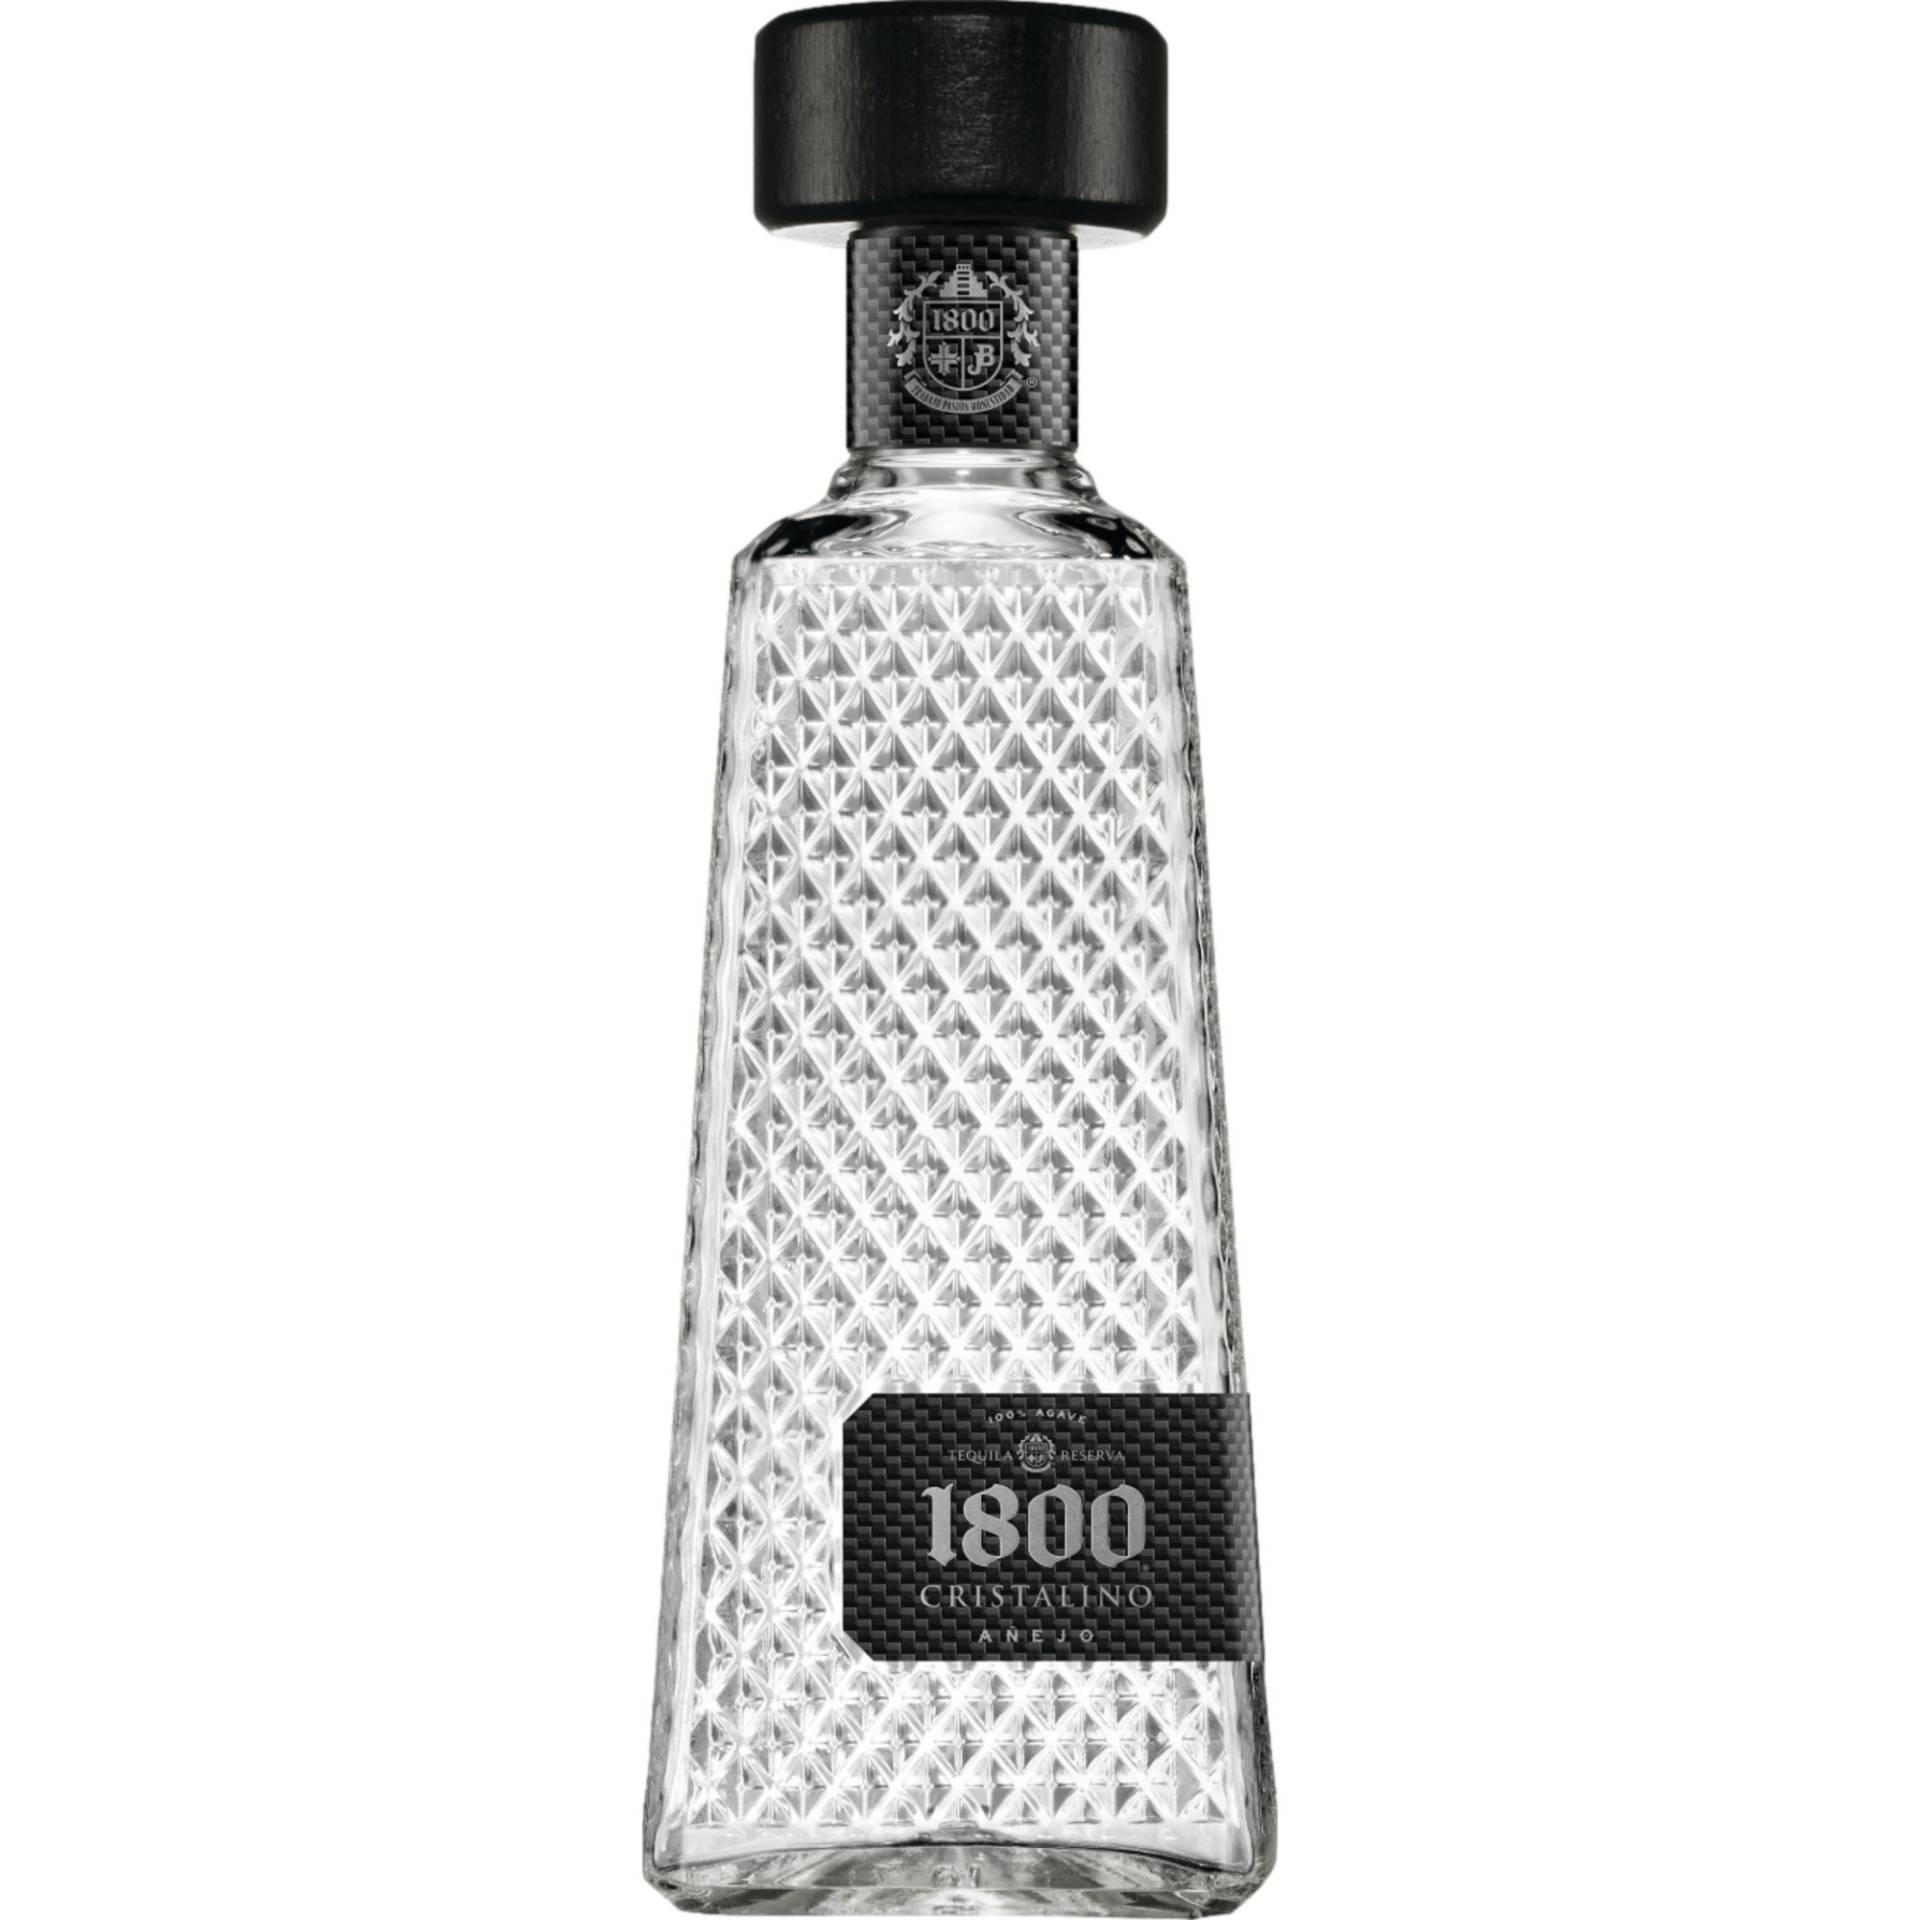 1800 Cristalino Tequila, Mexiko, 0,7 L, 38% Vol., Spirituosen von Casa Cuervo, S.A.DE C.V., Rio Churubusco N.0213, 08400 Ciudad de Mexico CP, Mexiko